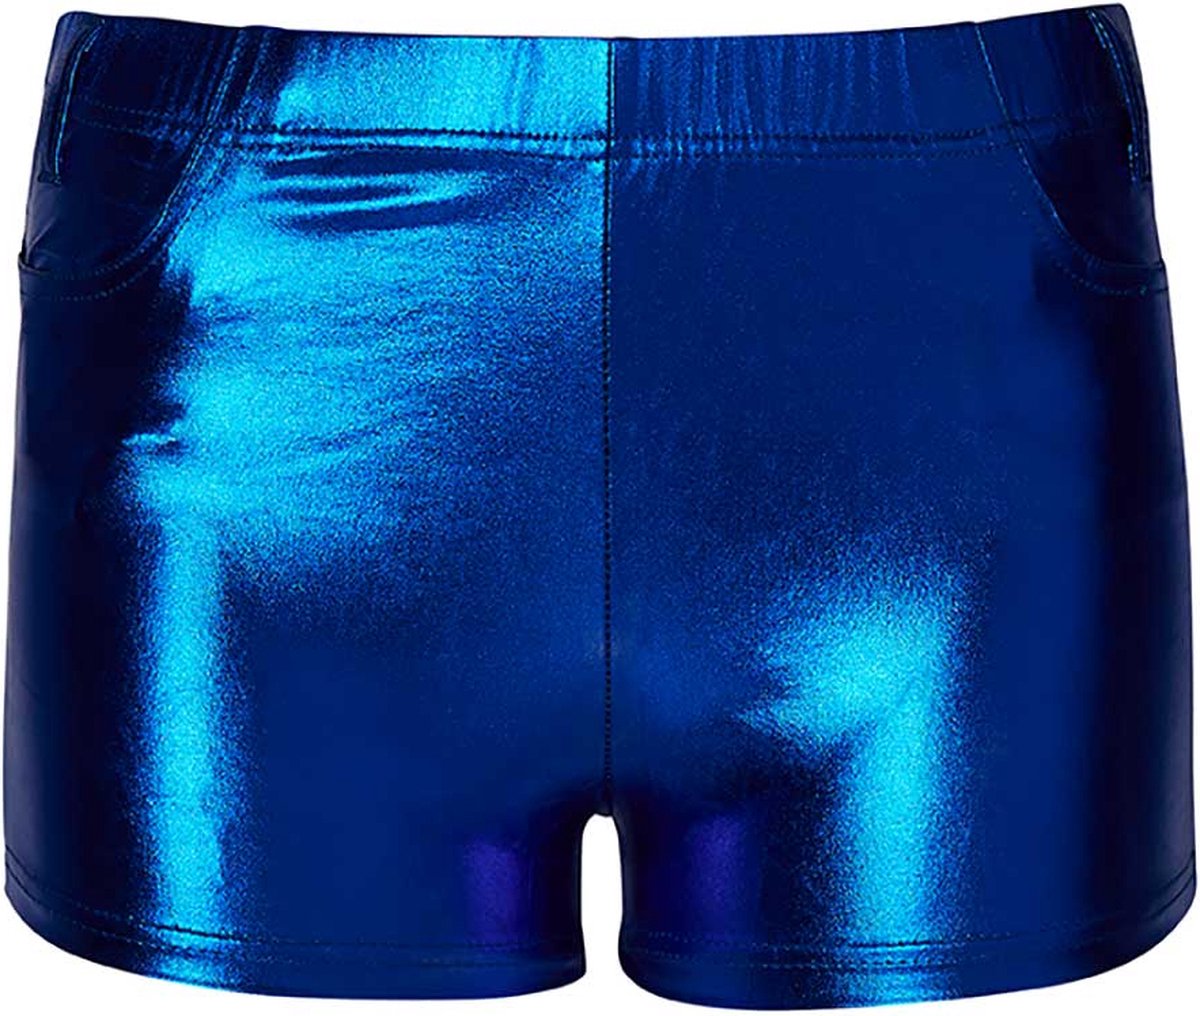 Hotpants dames | Latex | Kobalt Blauw | Maat XXS/XS | Hotpants | Carnavalskleding | Feestkleding | Hotpants latex | Hotpants dames | Apollo